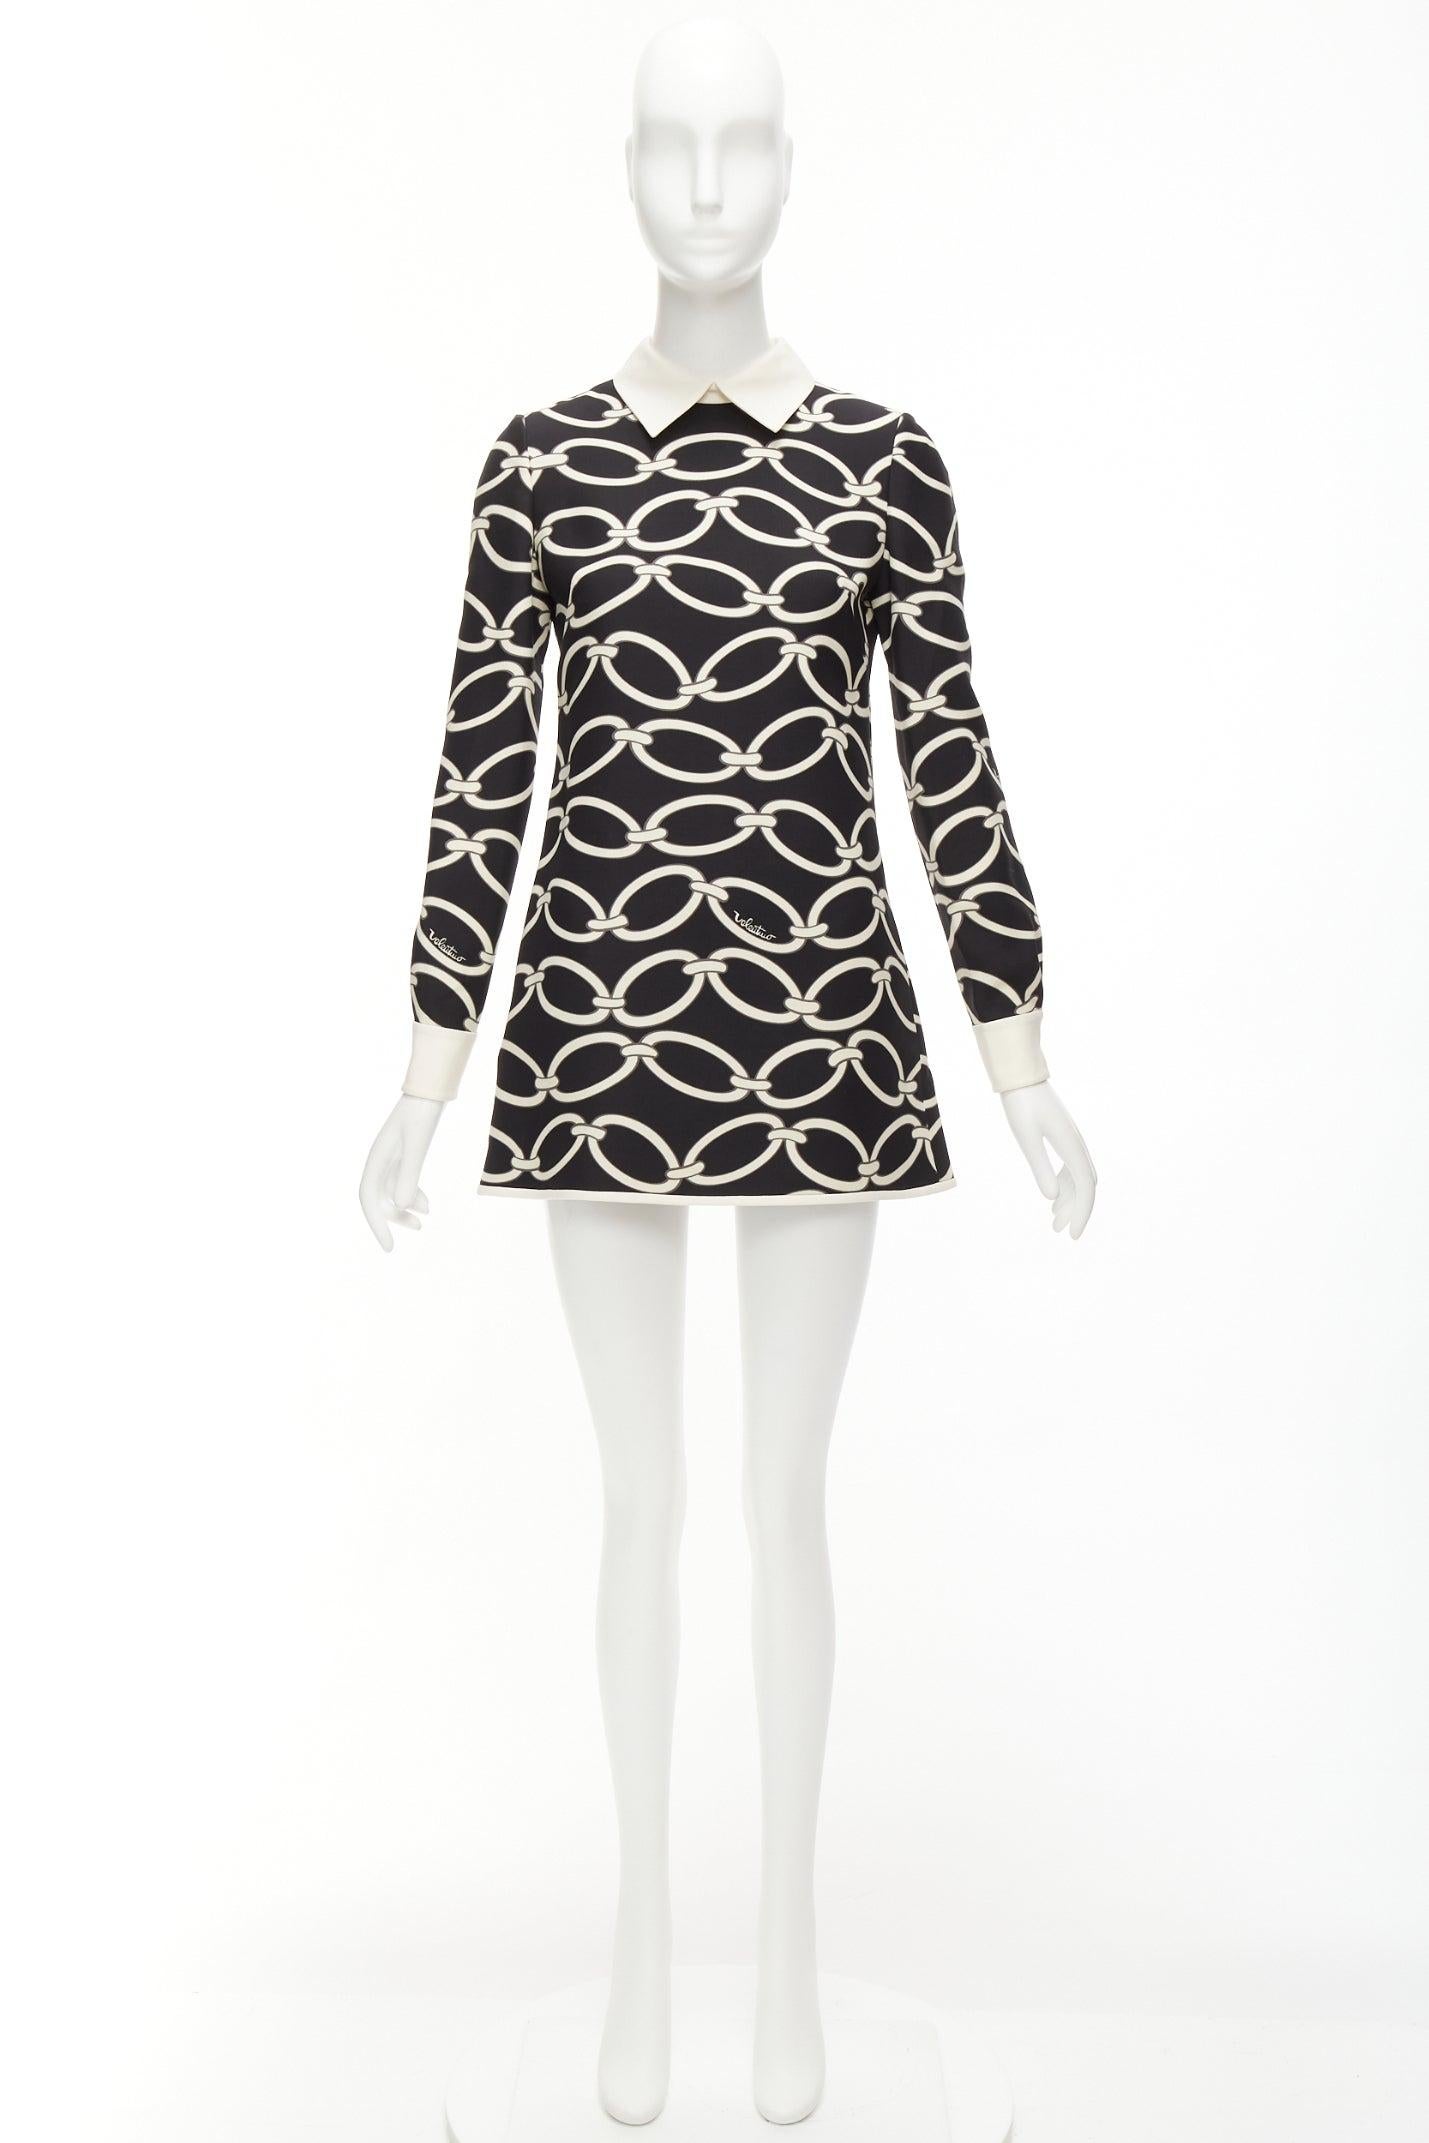 VALENTINO black white chain print virgin wool silk shift dress IT38 XS For Sale 6